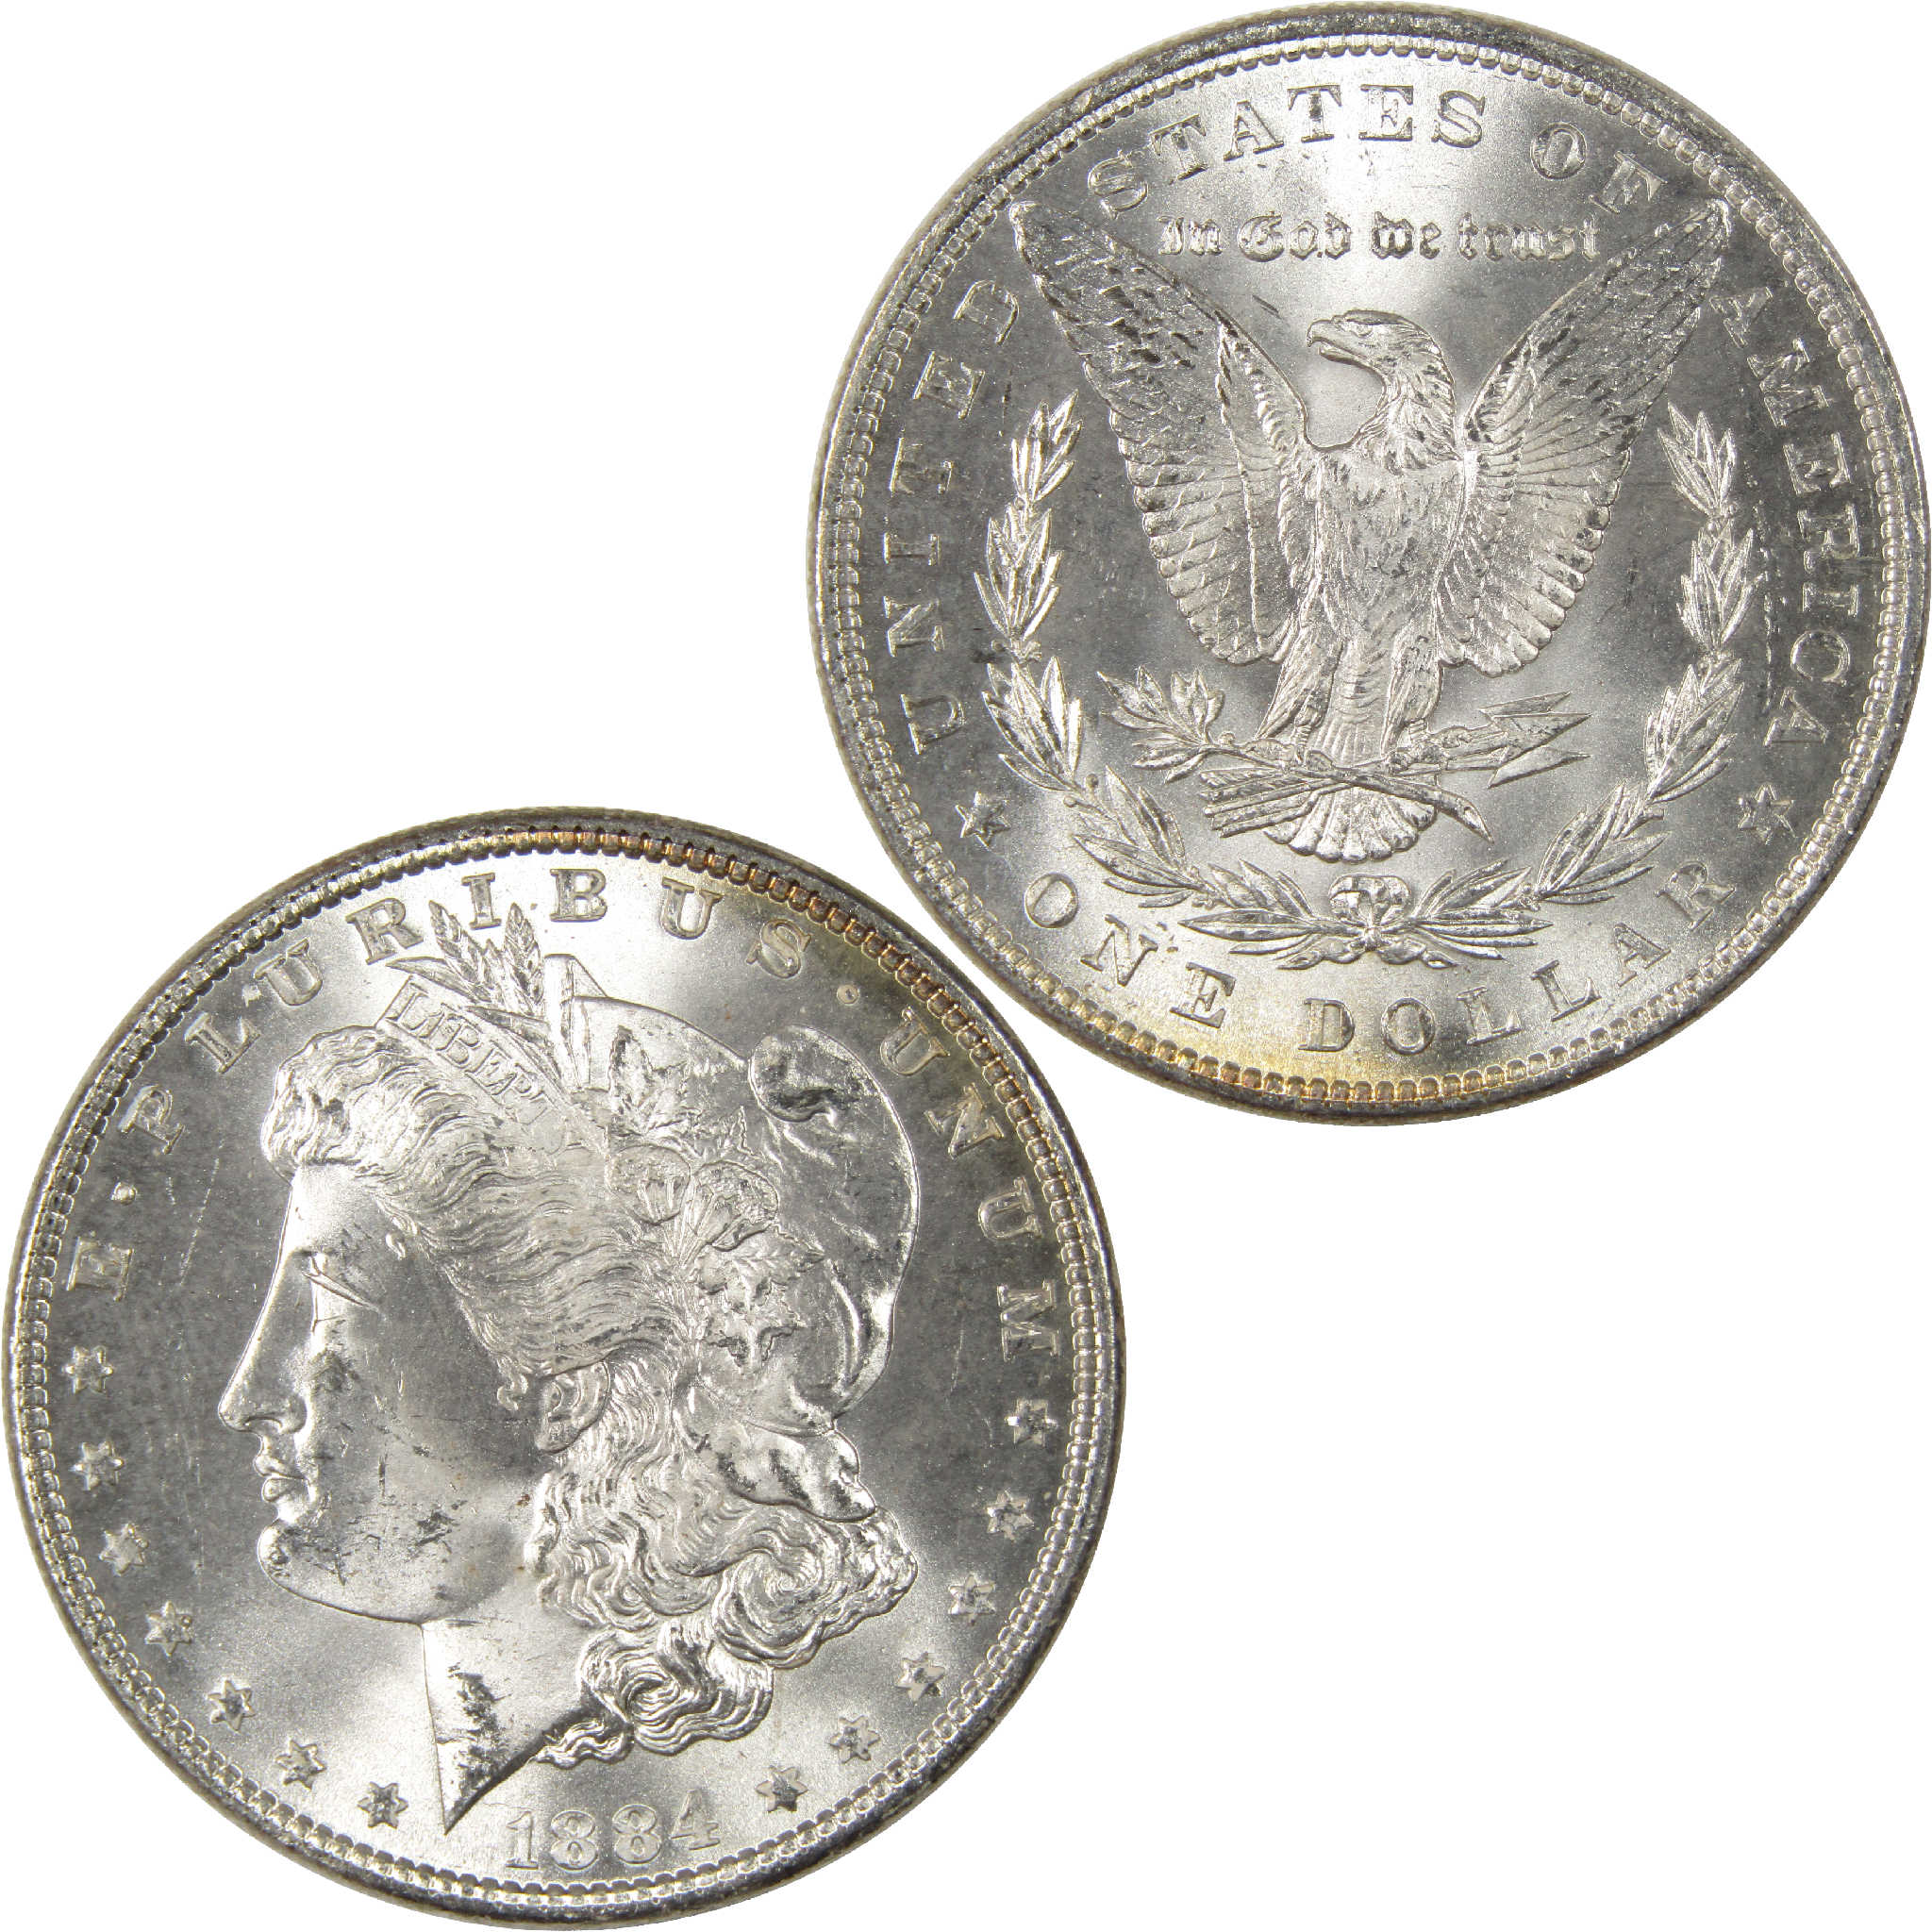 1884 Morgan Dollar BU Choice Uncirculated Silver $1 Coin - Morgan coin - Morgan silver dollar - Morgan silver dollar for sale - Profile Coins &amp; Collectibles